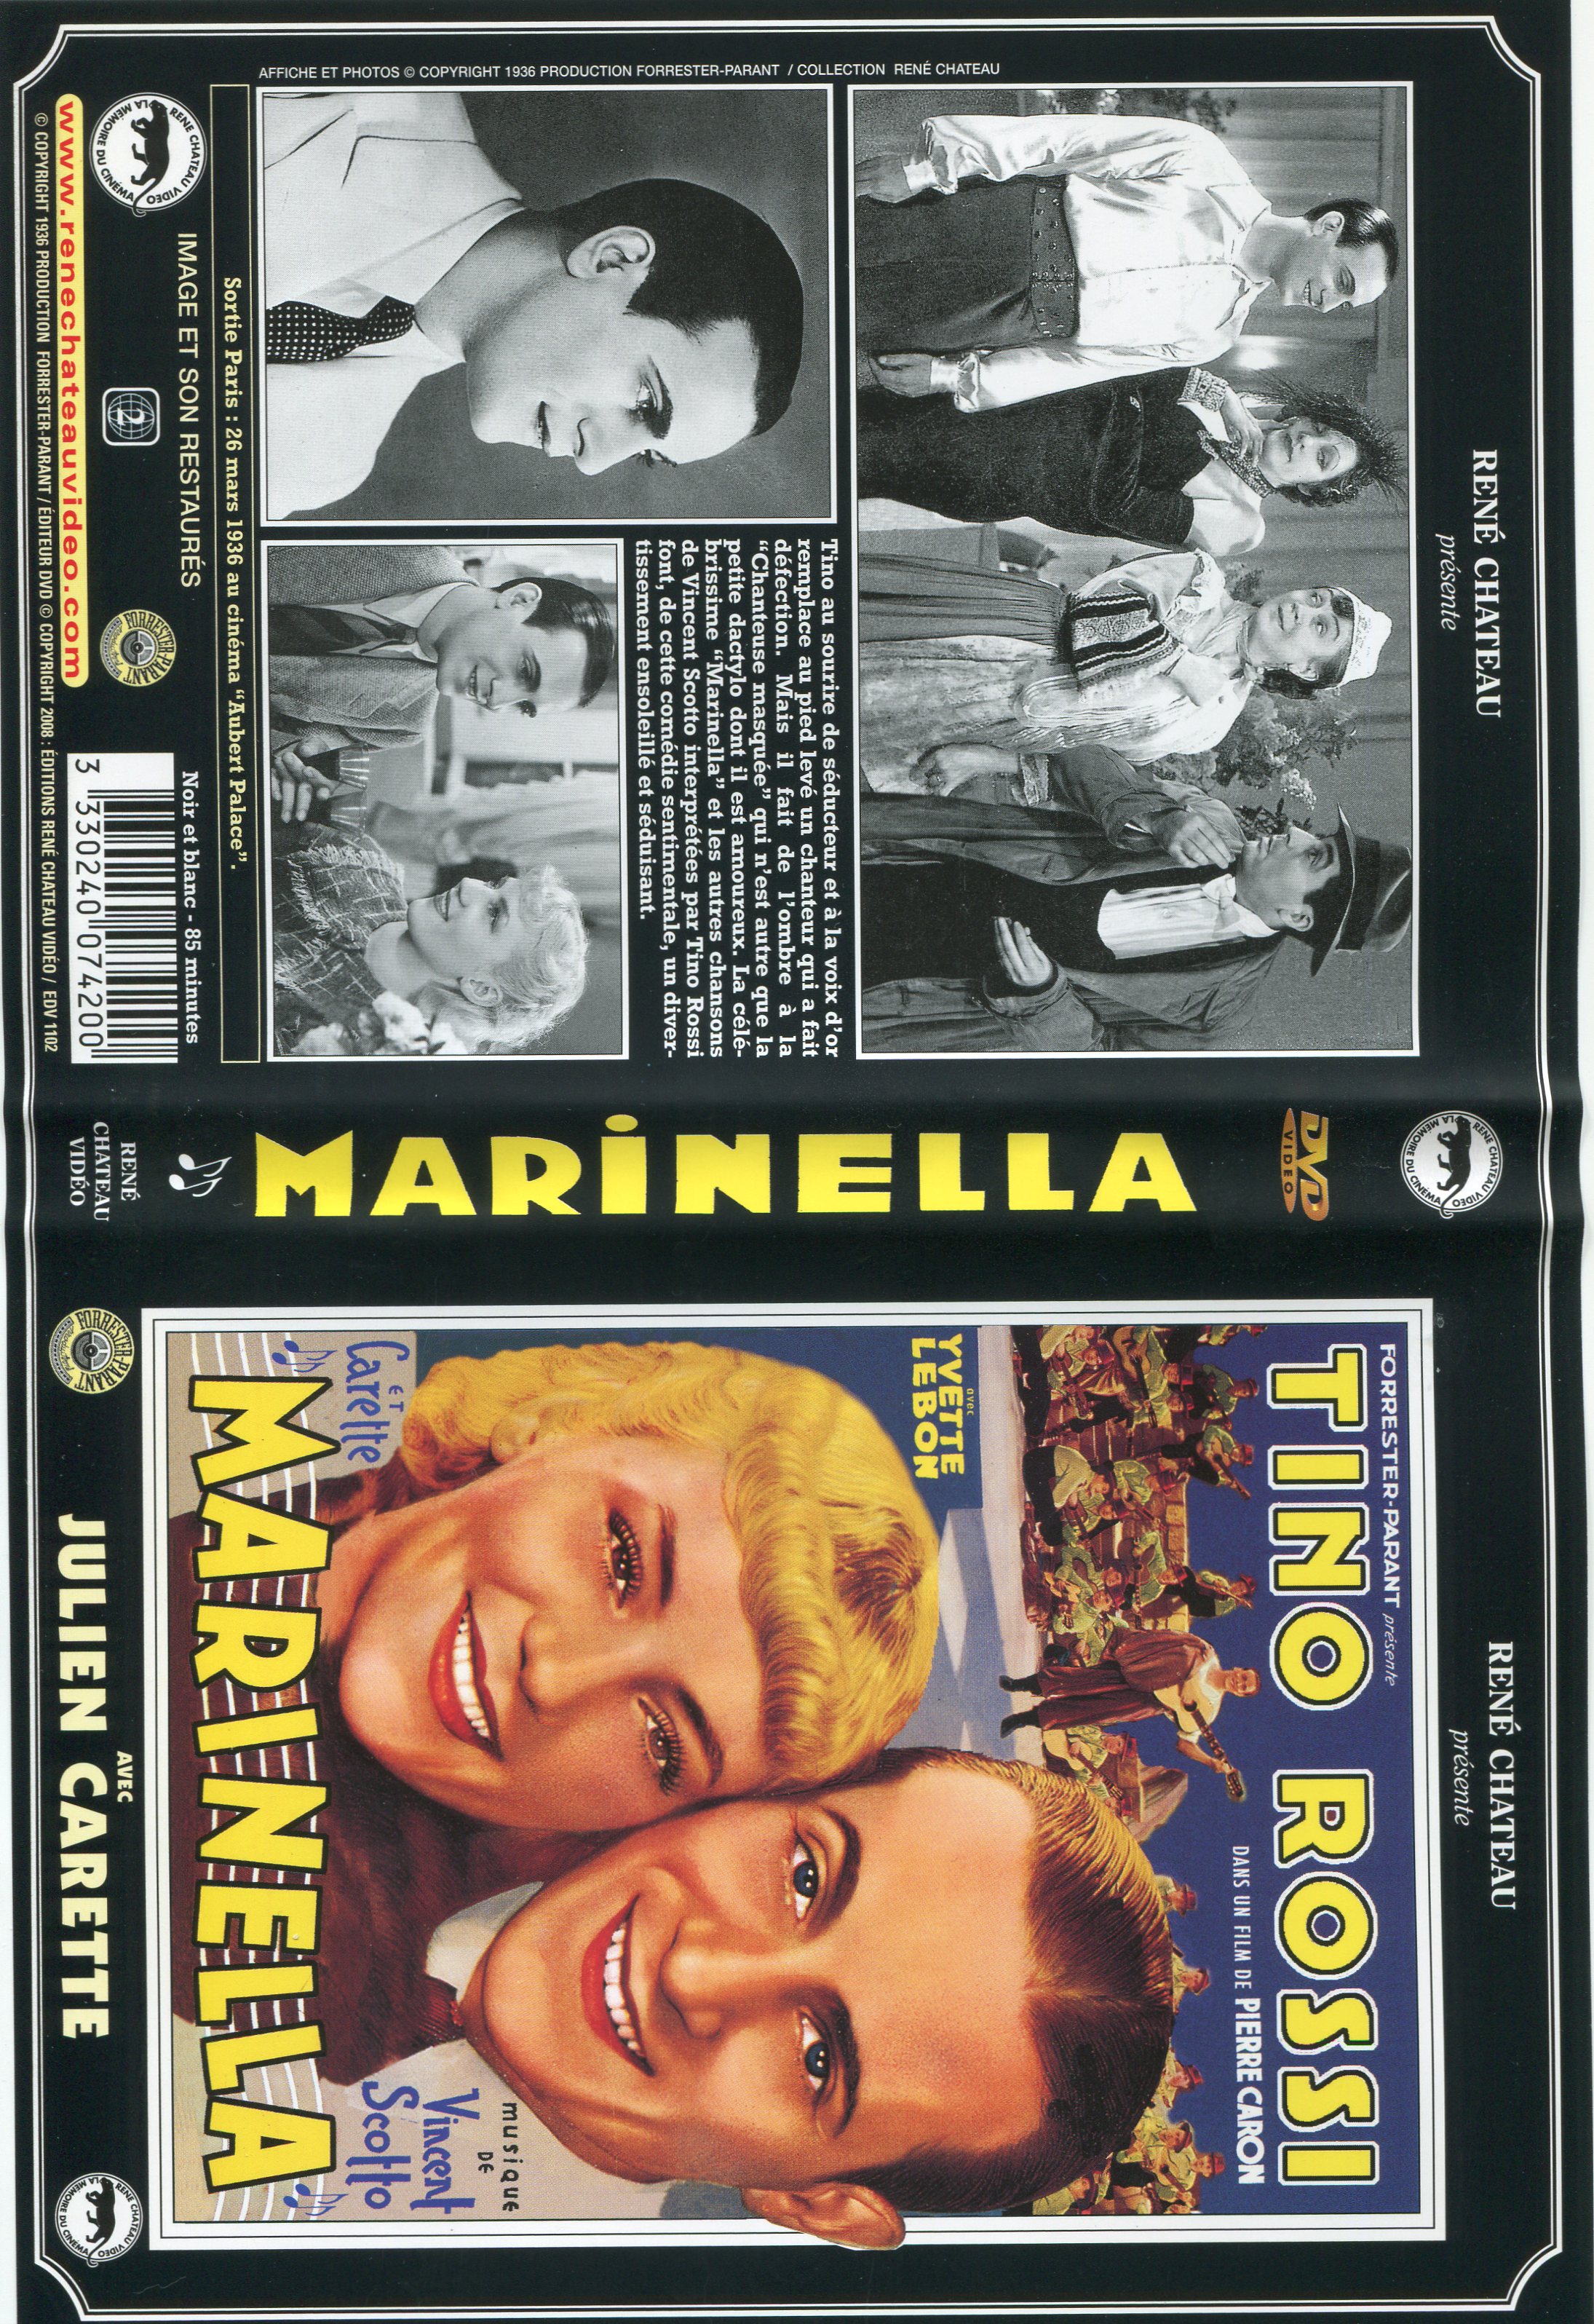 Jaquette DVD Marinella